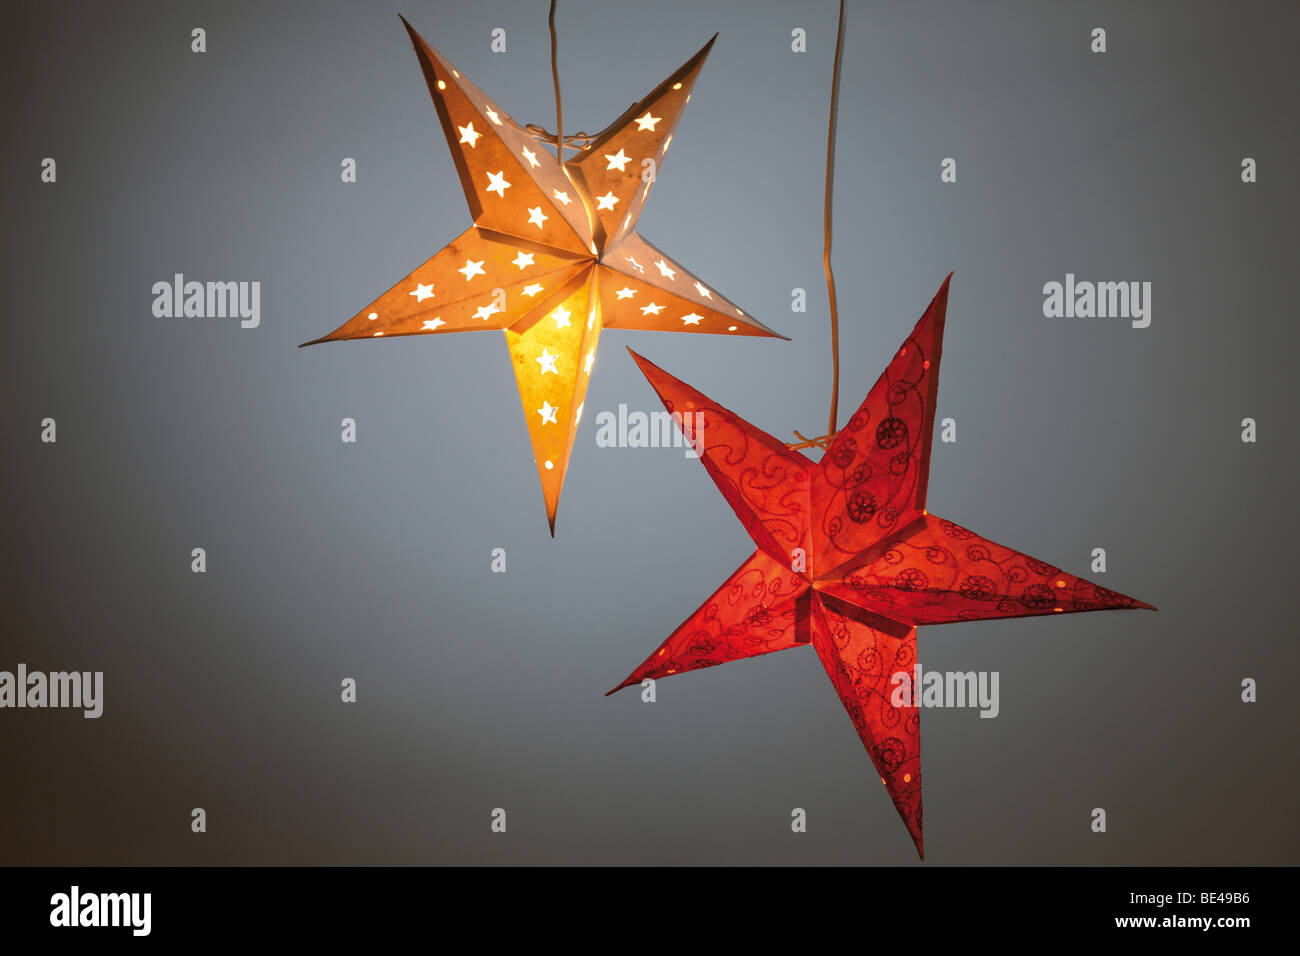 Illuminated stars, paper stars Stock Photo